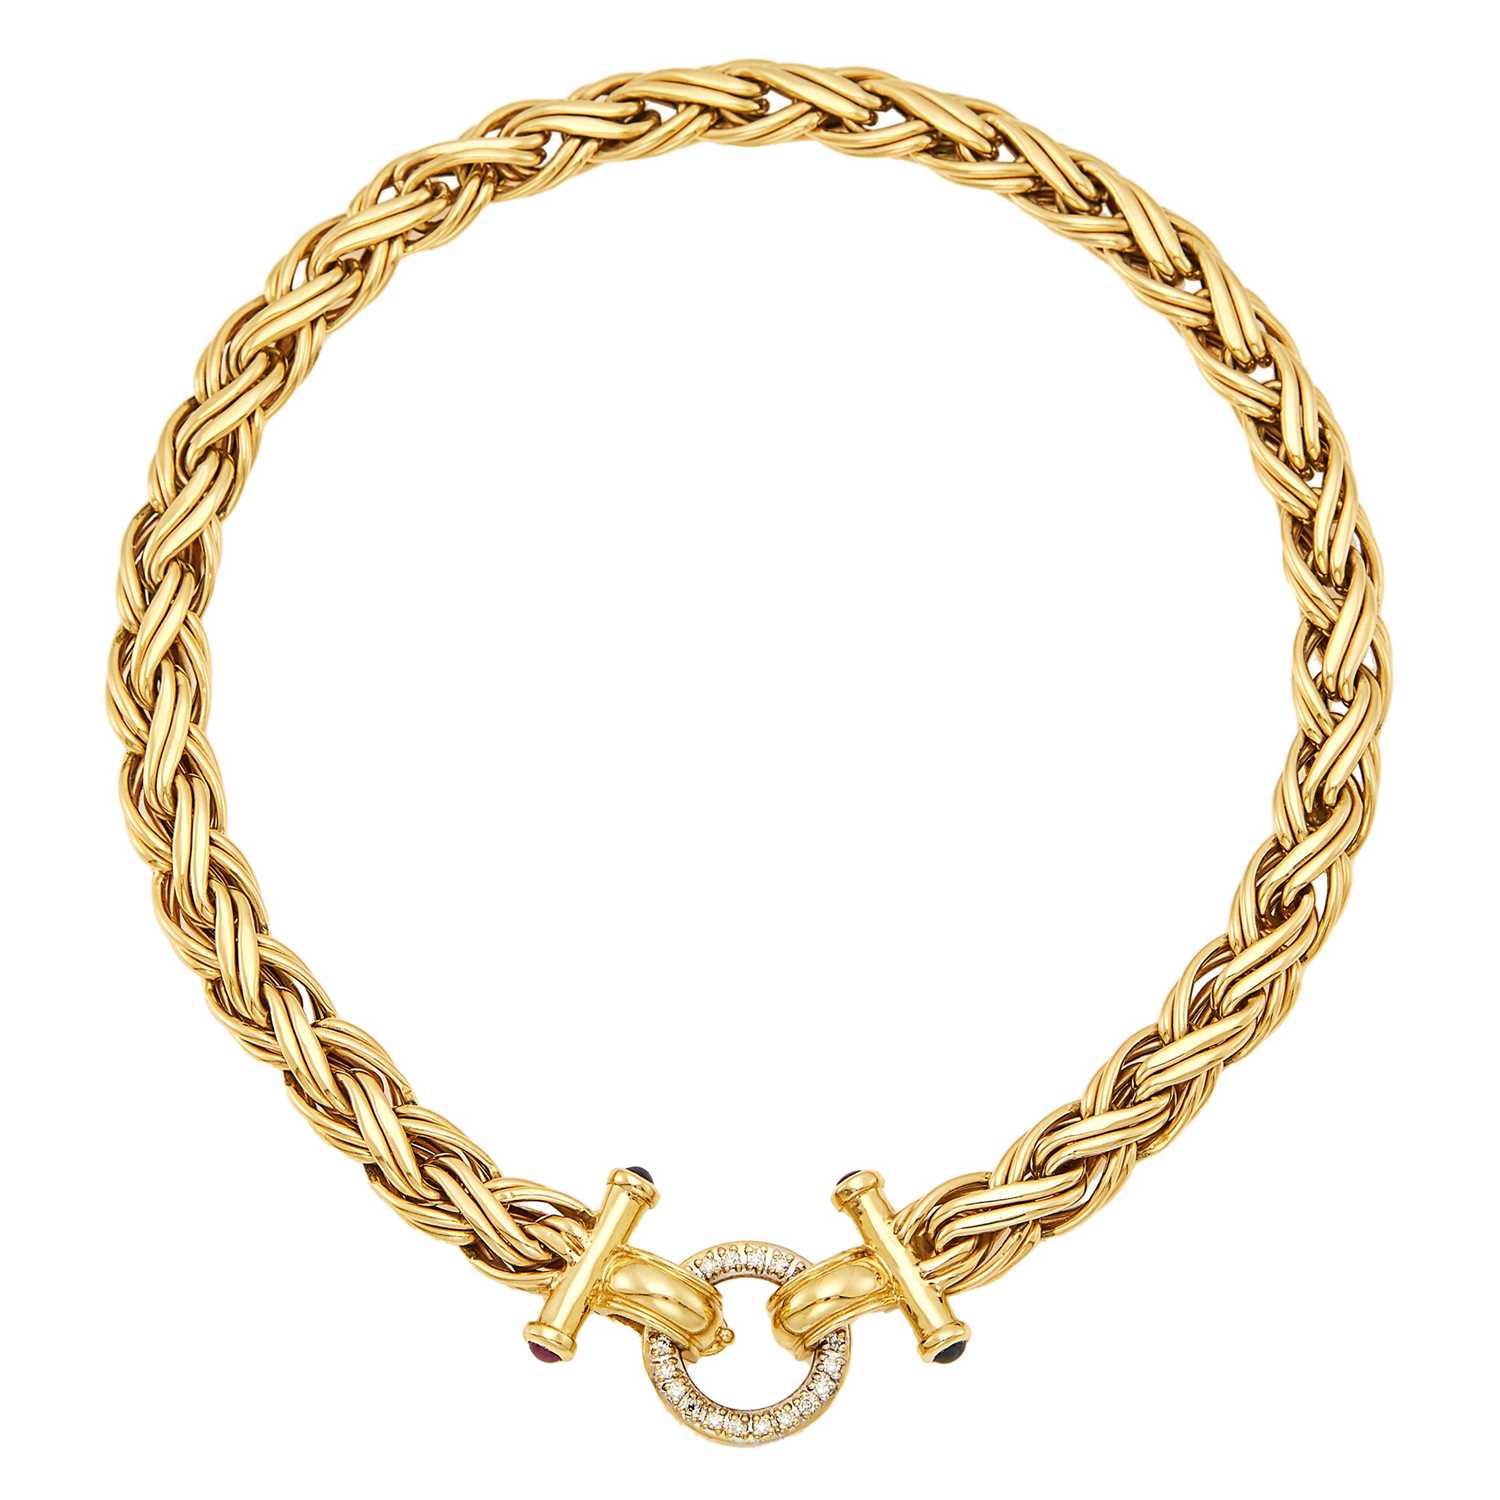 Lot 2062 - Gold, Diamond and Gem-Set Toggle Necklace